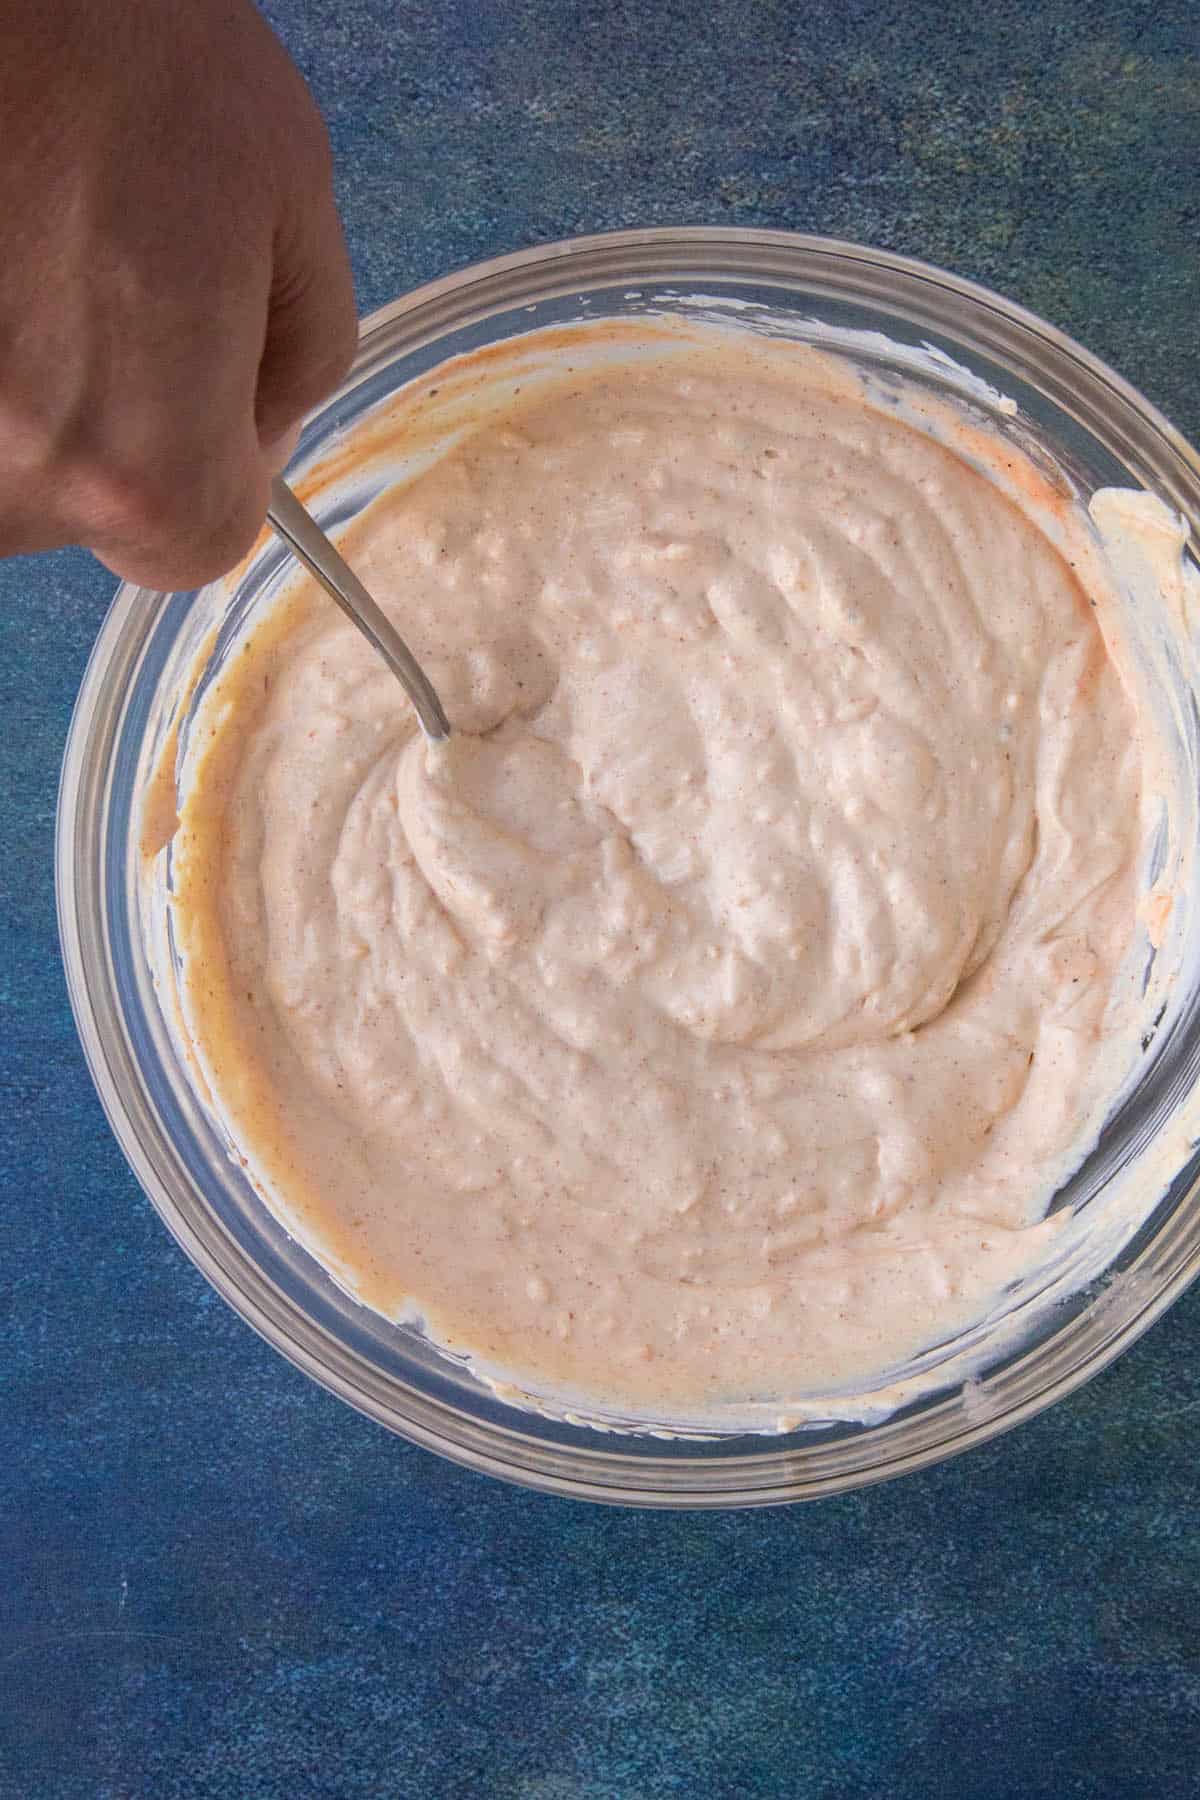 Mixed sour cream dip in a bowl